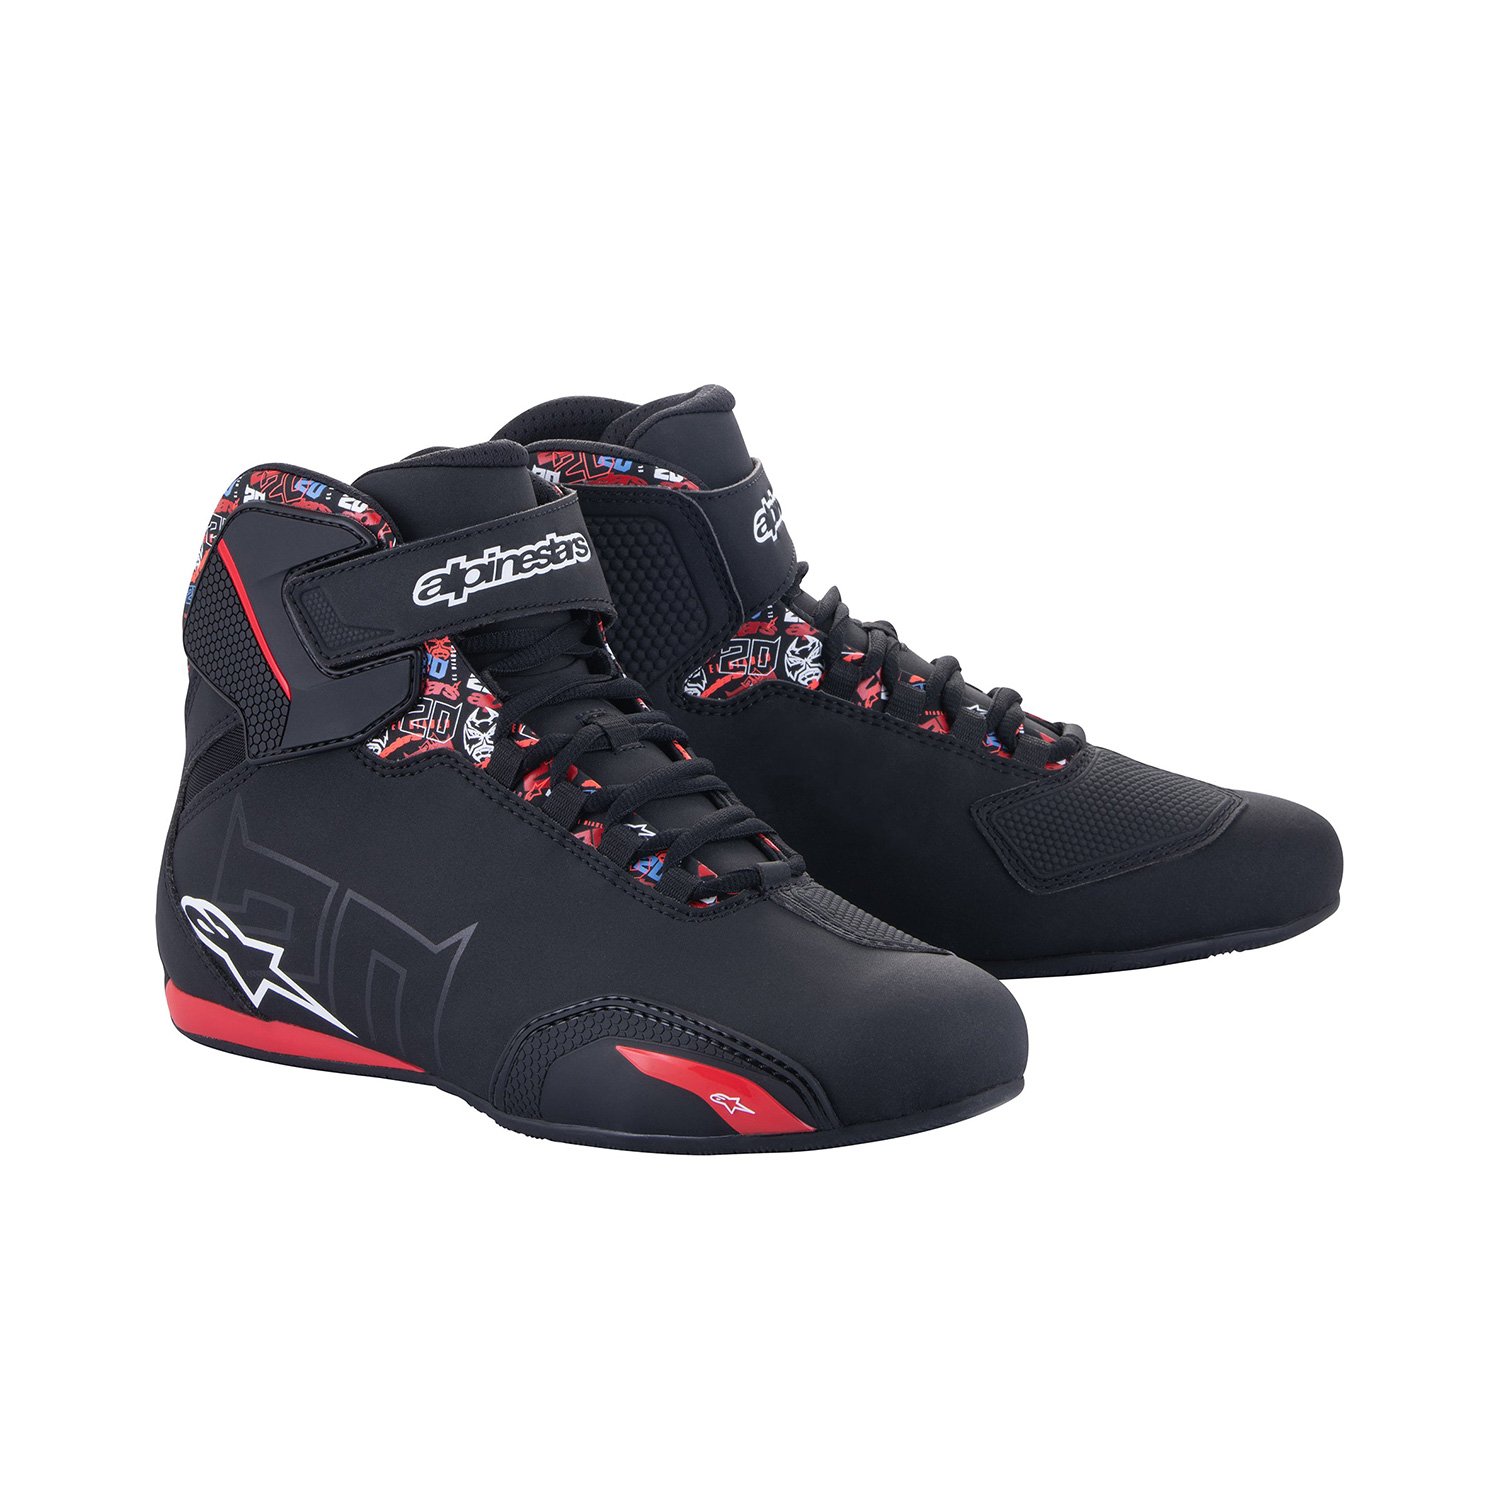 Image of Alpinestars FQ20 Sektor Shoes Black Bright Red Size US 8 ID 8059347261447